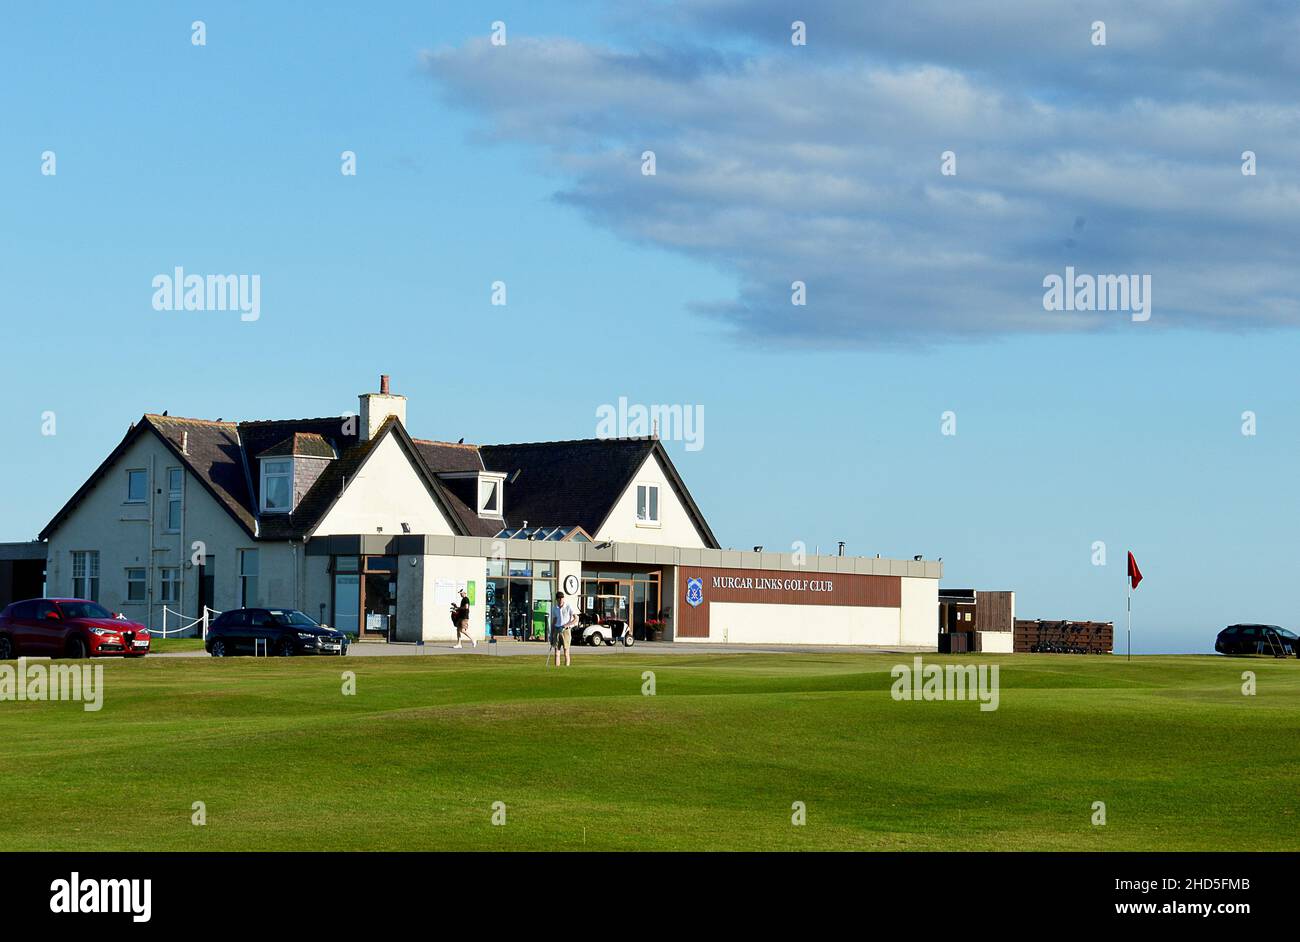 ABERDEEN, SCHOTTLAND - 7. SEPTEMBER 2021; das Clubhaus am Murcar Golf Course, einem berühmten Links Golf Course an der Nordsee, wurde 1909 angelegt. Stockfoto